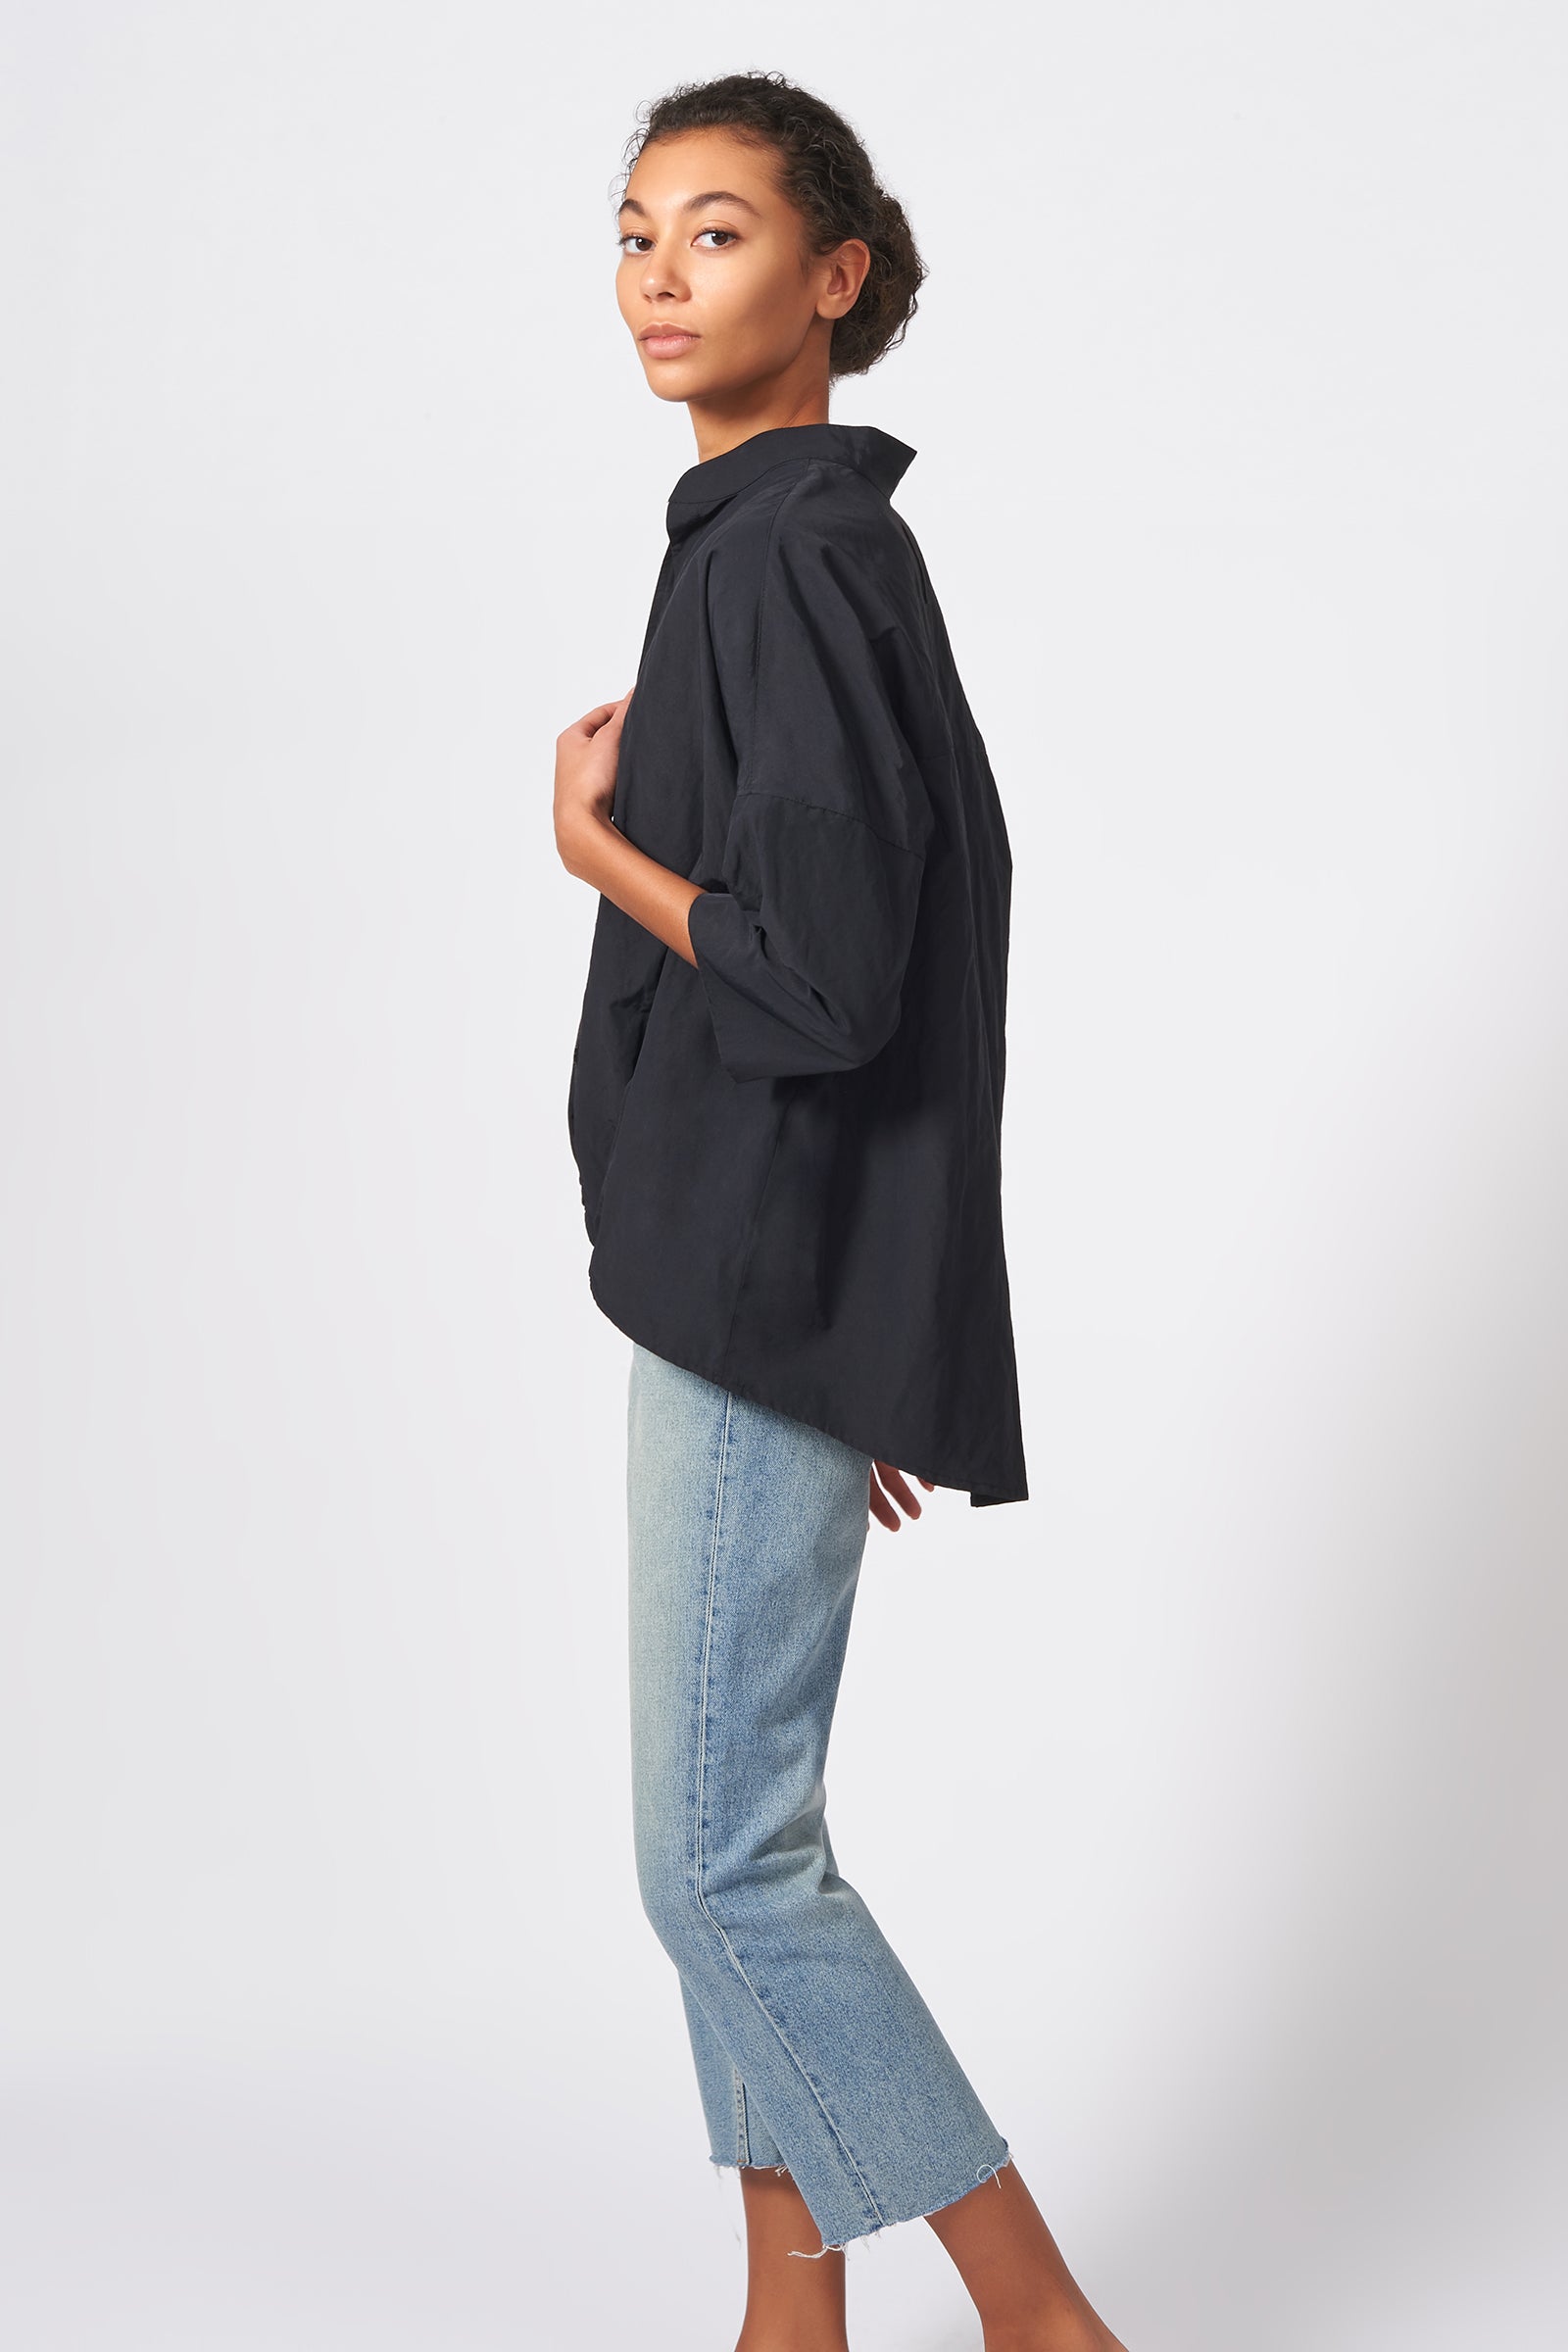 Kal Rieman Pleat Hem Kimono Cotton Nylon in Black on Model Front View